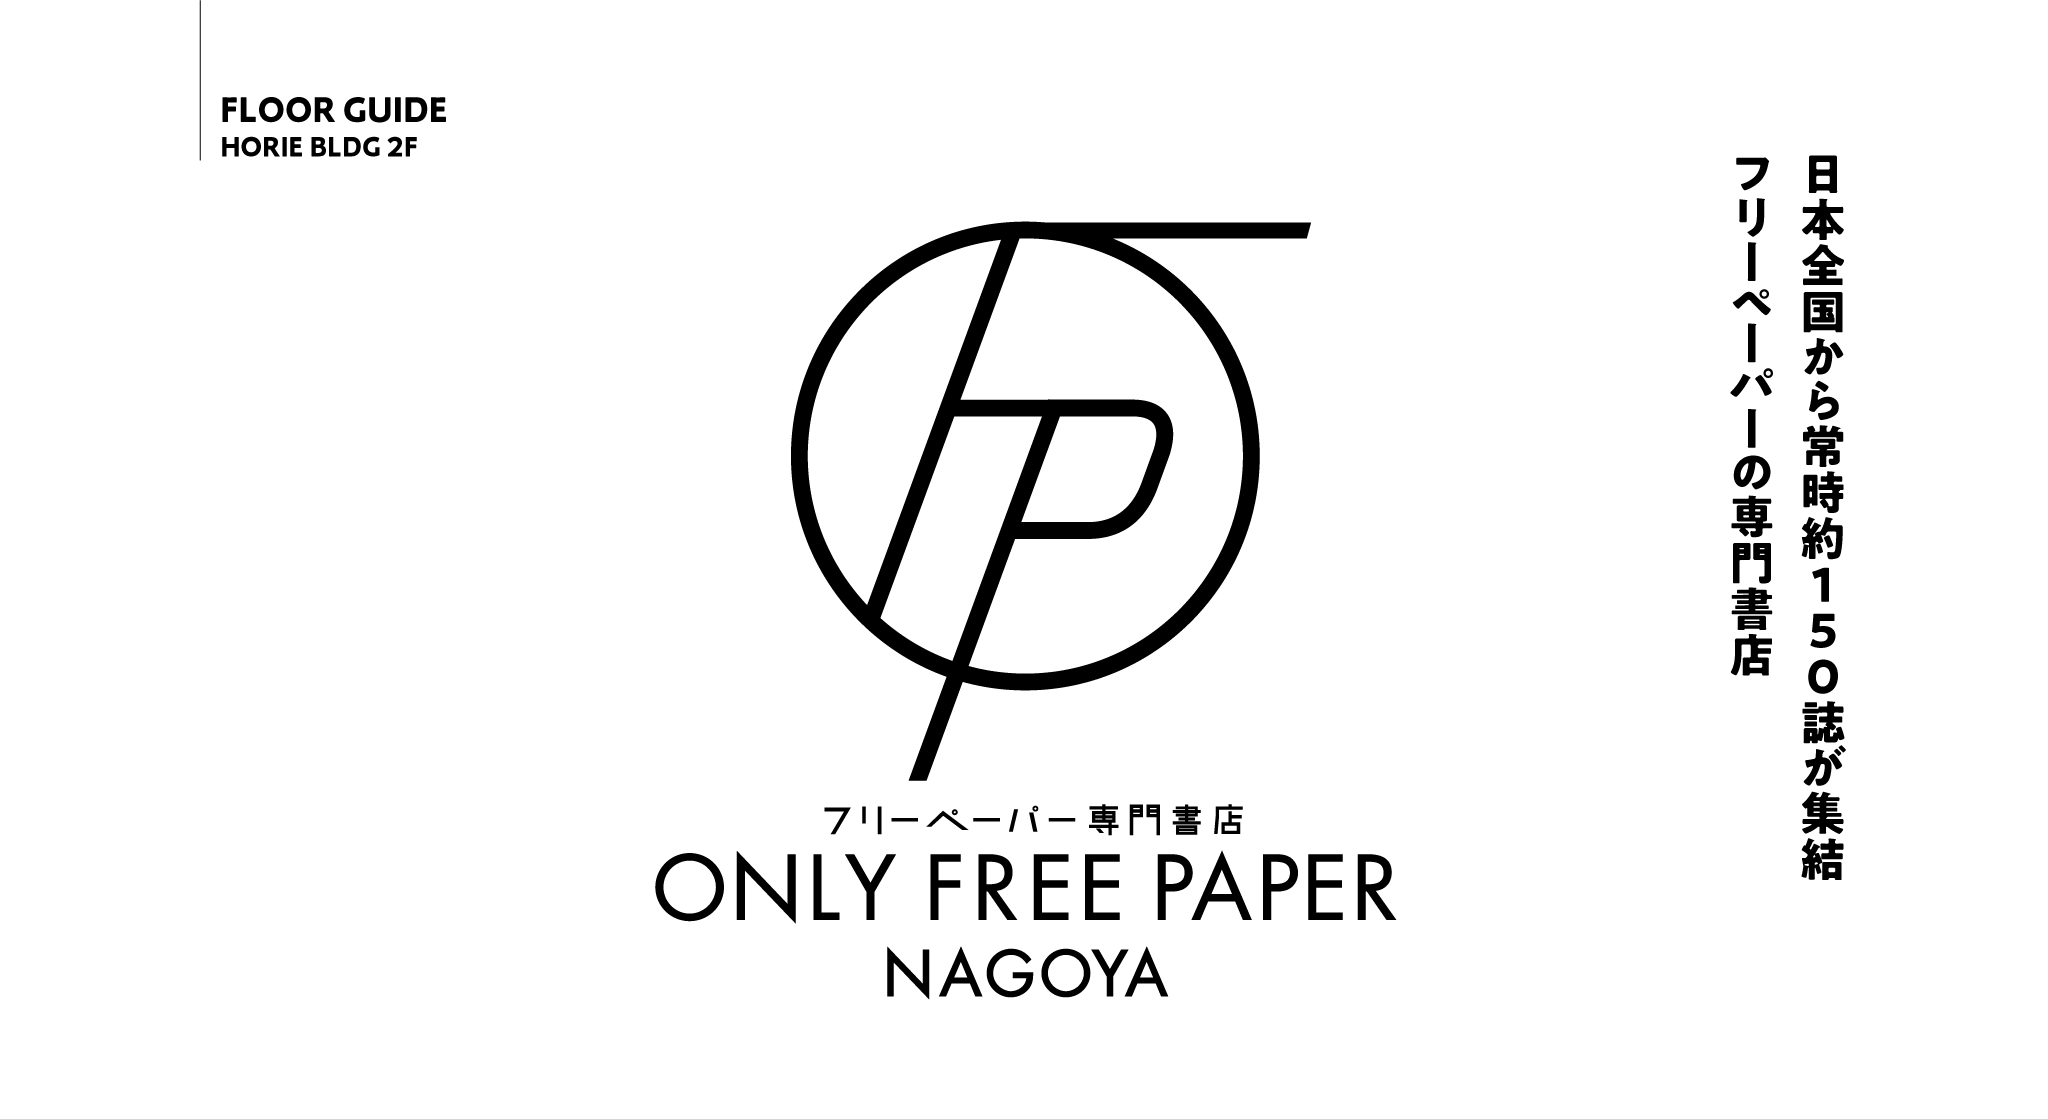 FLOOR GUIDE｜ONLY FREE PAPER NAGOYA